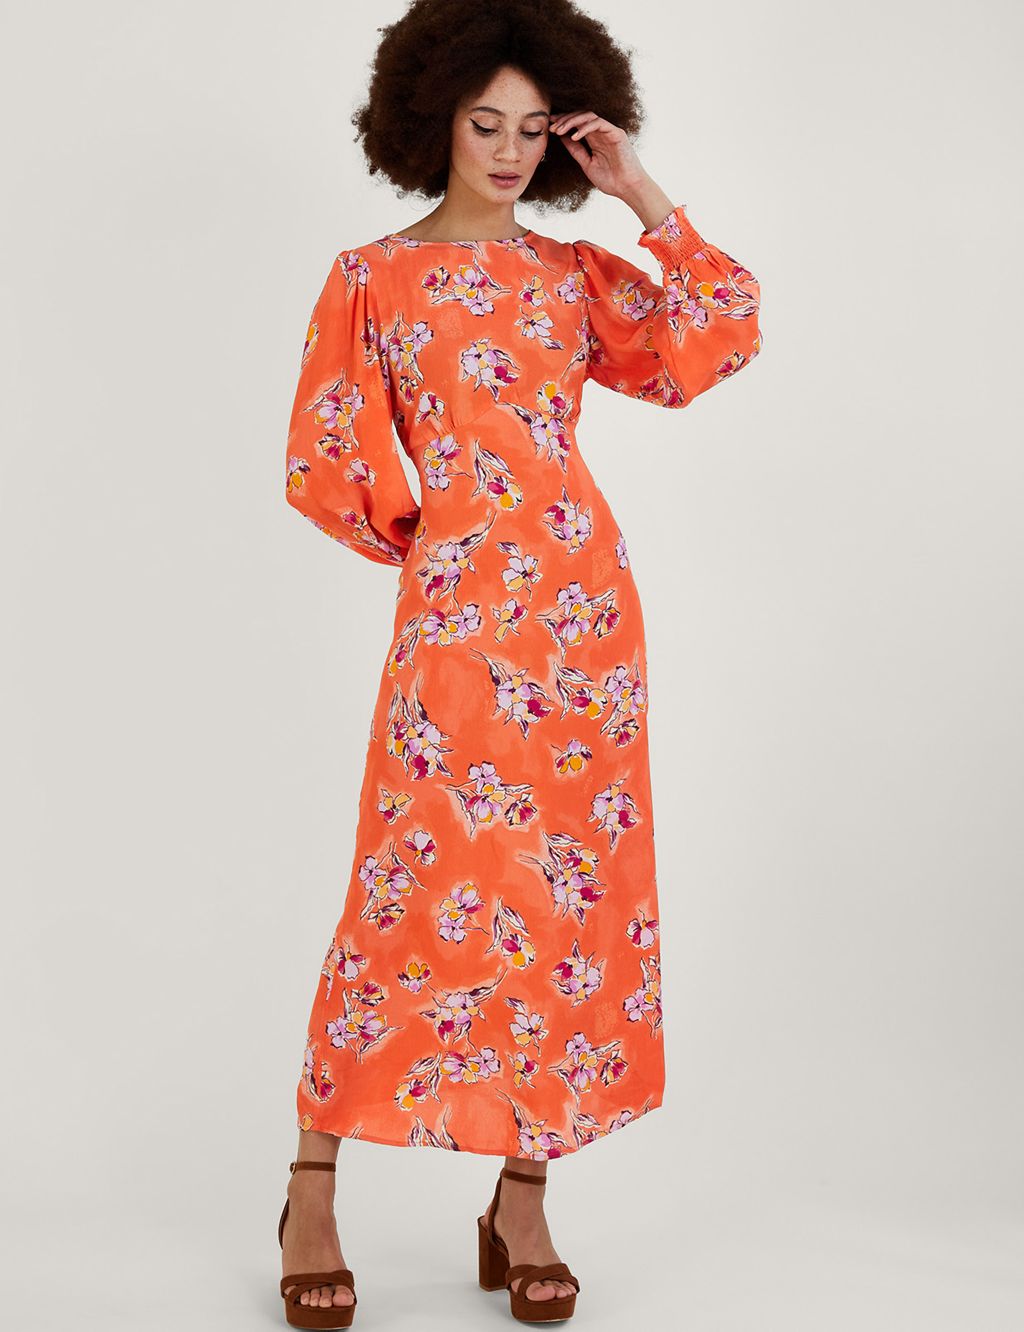 Floral Blouson Sleeve Midaxi Tea Dress image 1